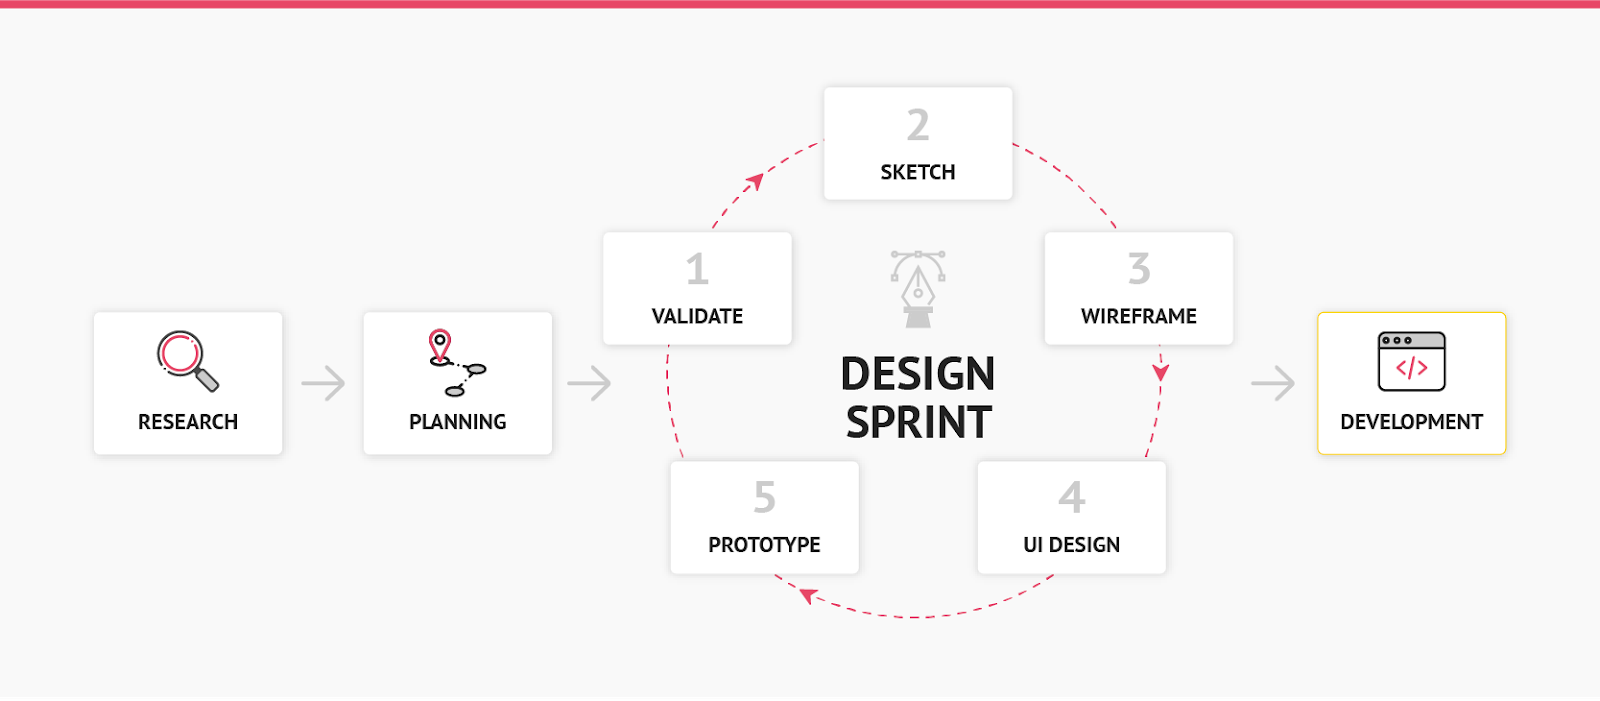 Our design process